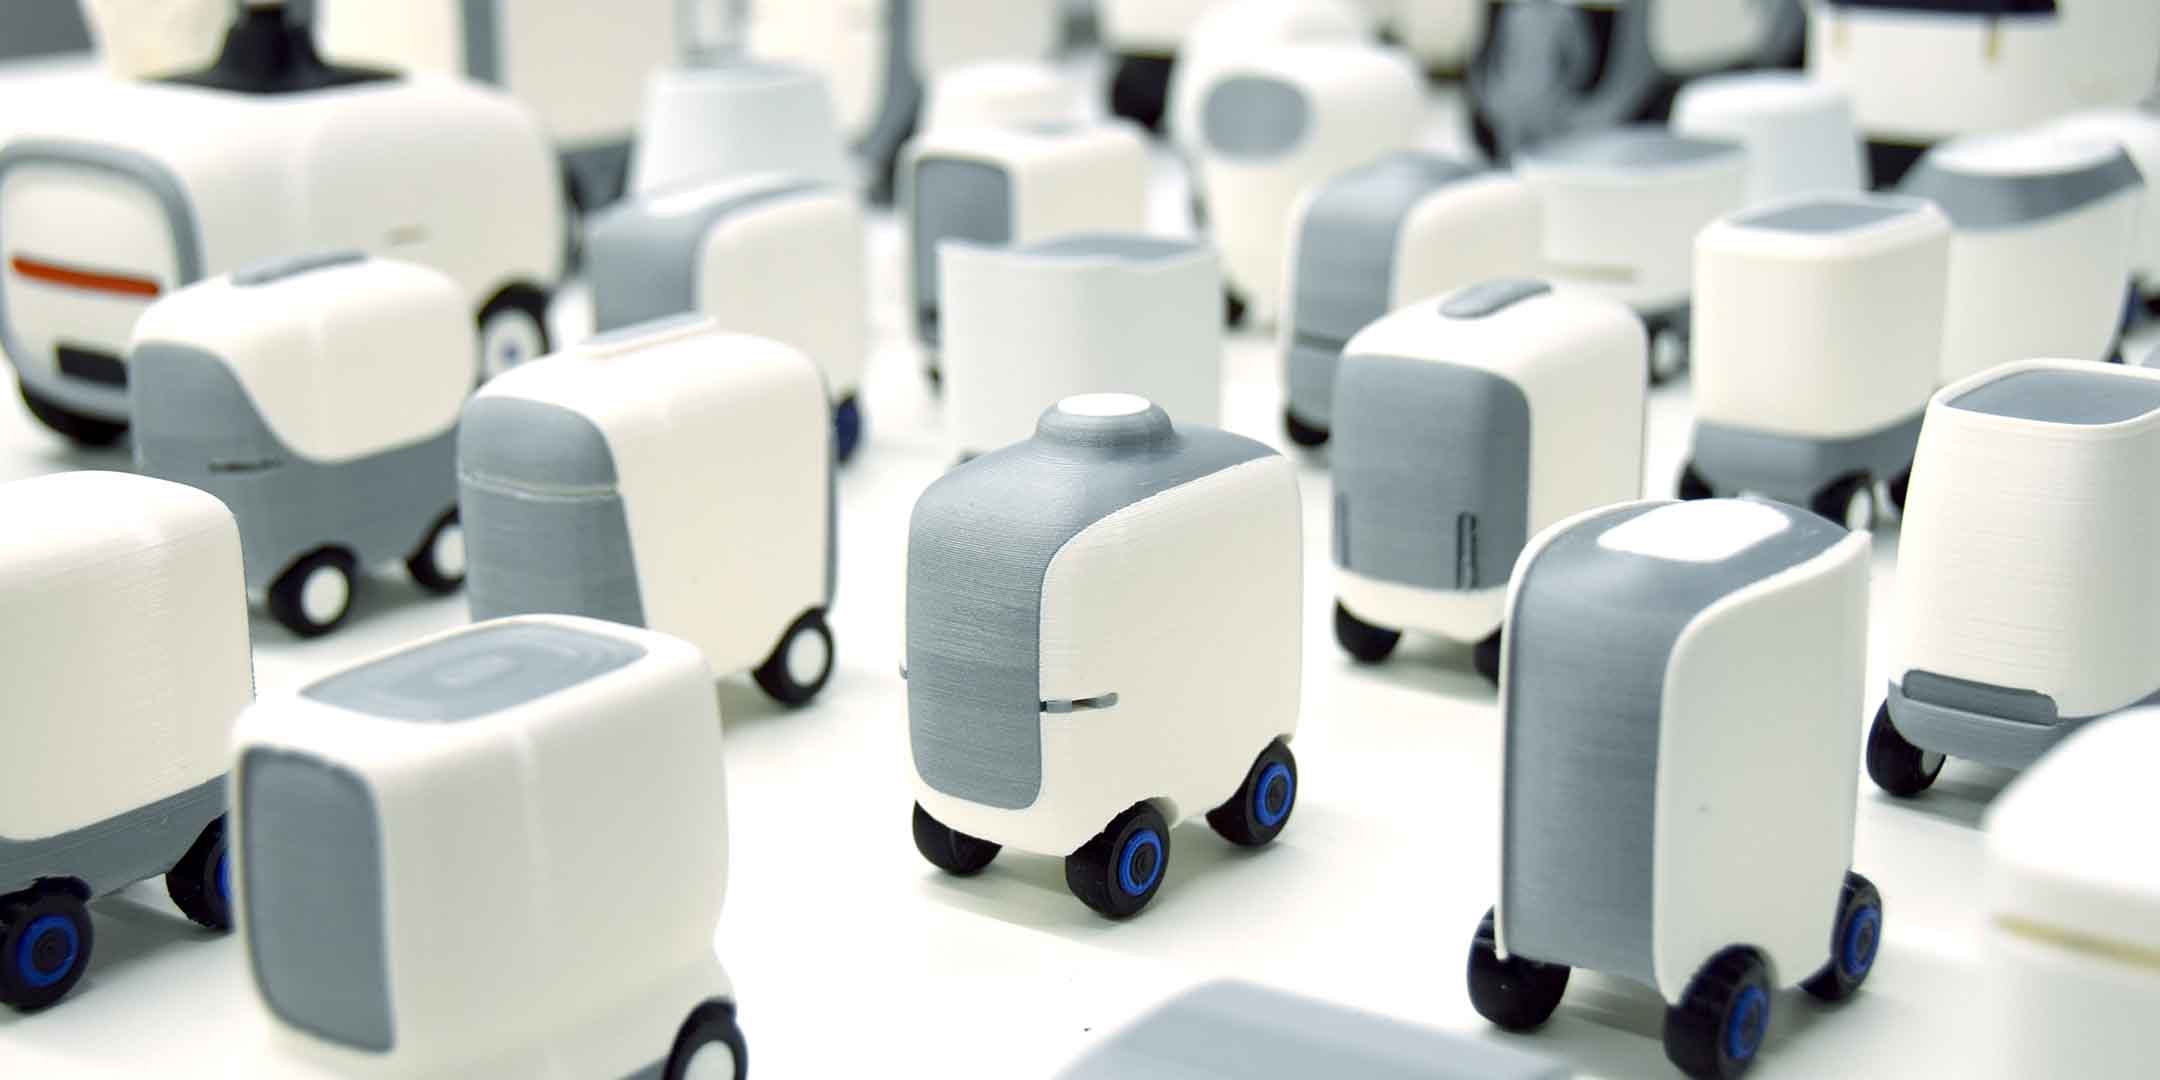 3D printed prototypes of autonomous delivery robot designs